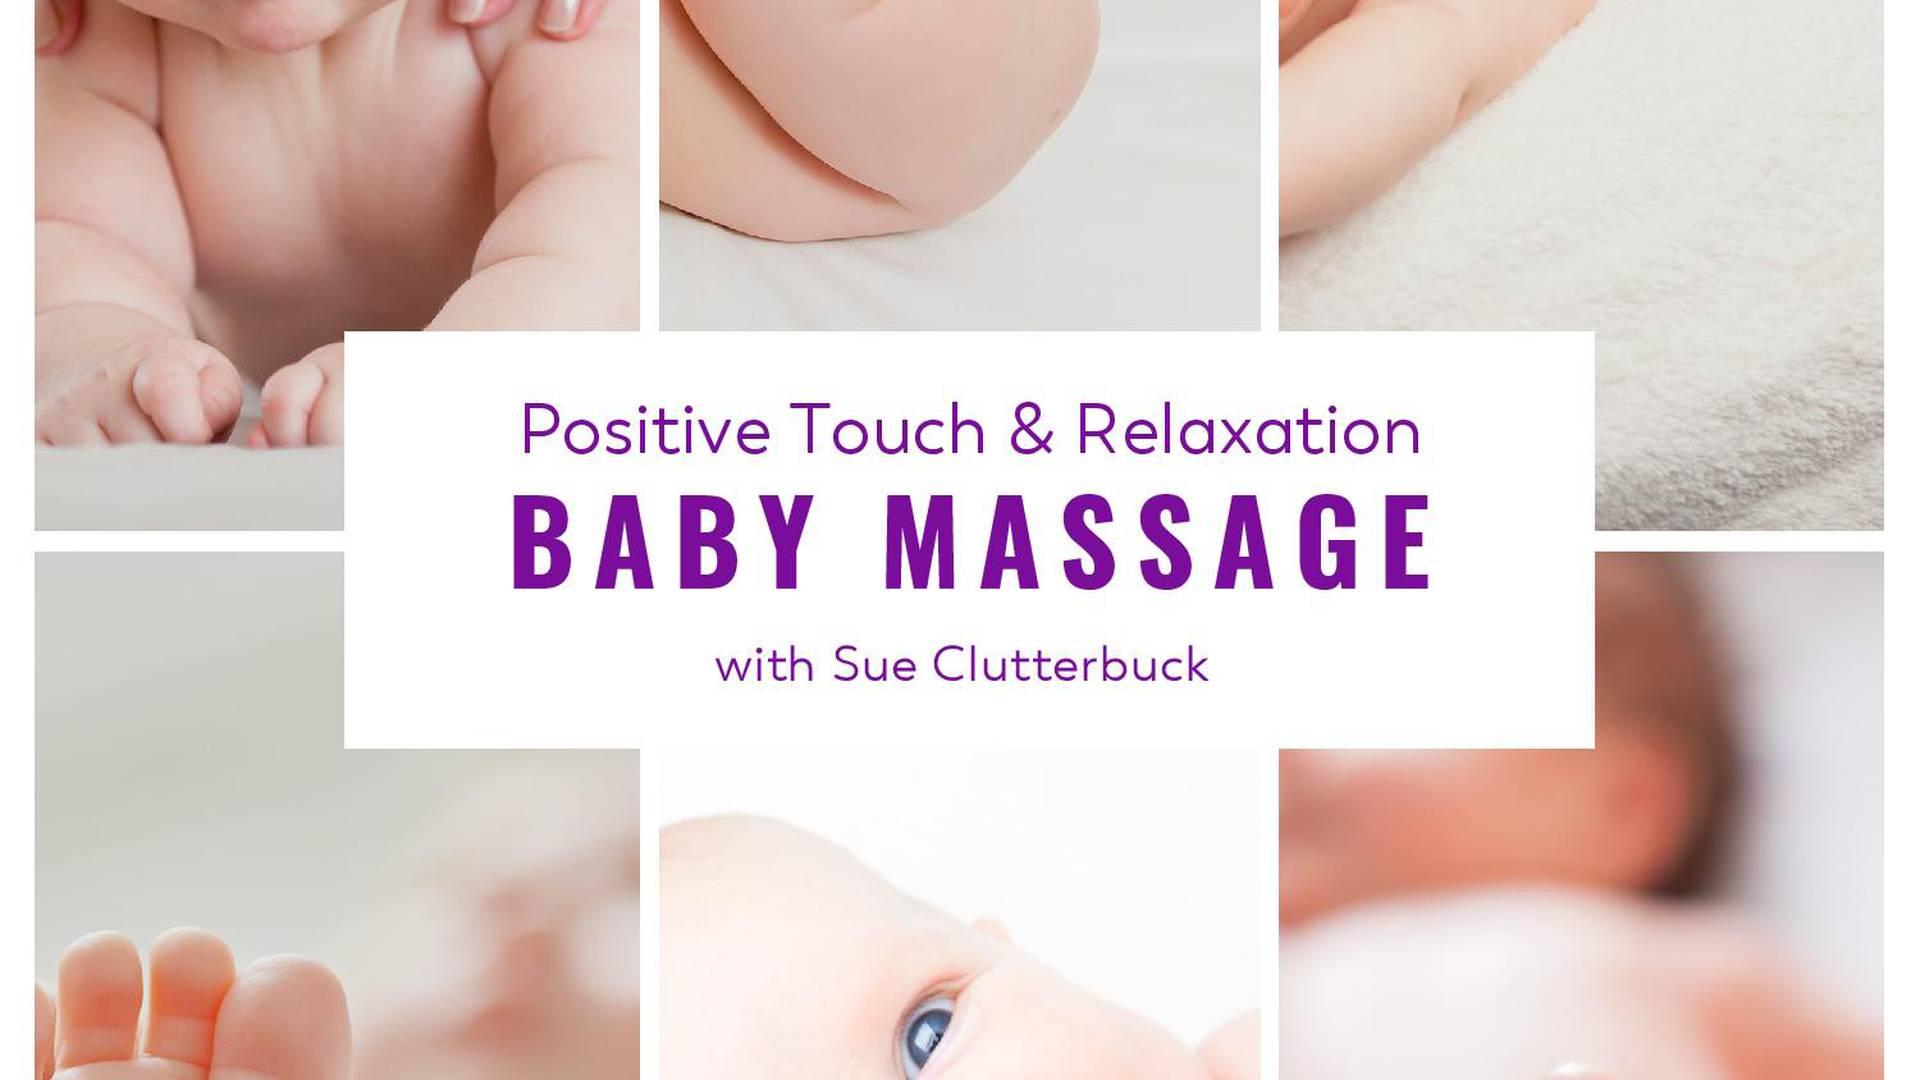 Suething Hands Baby Massage photo